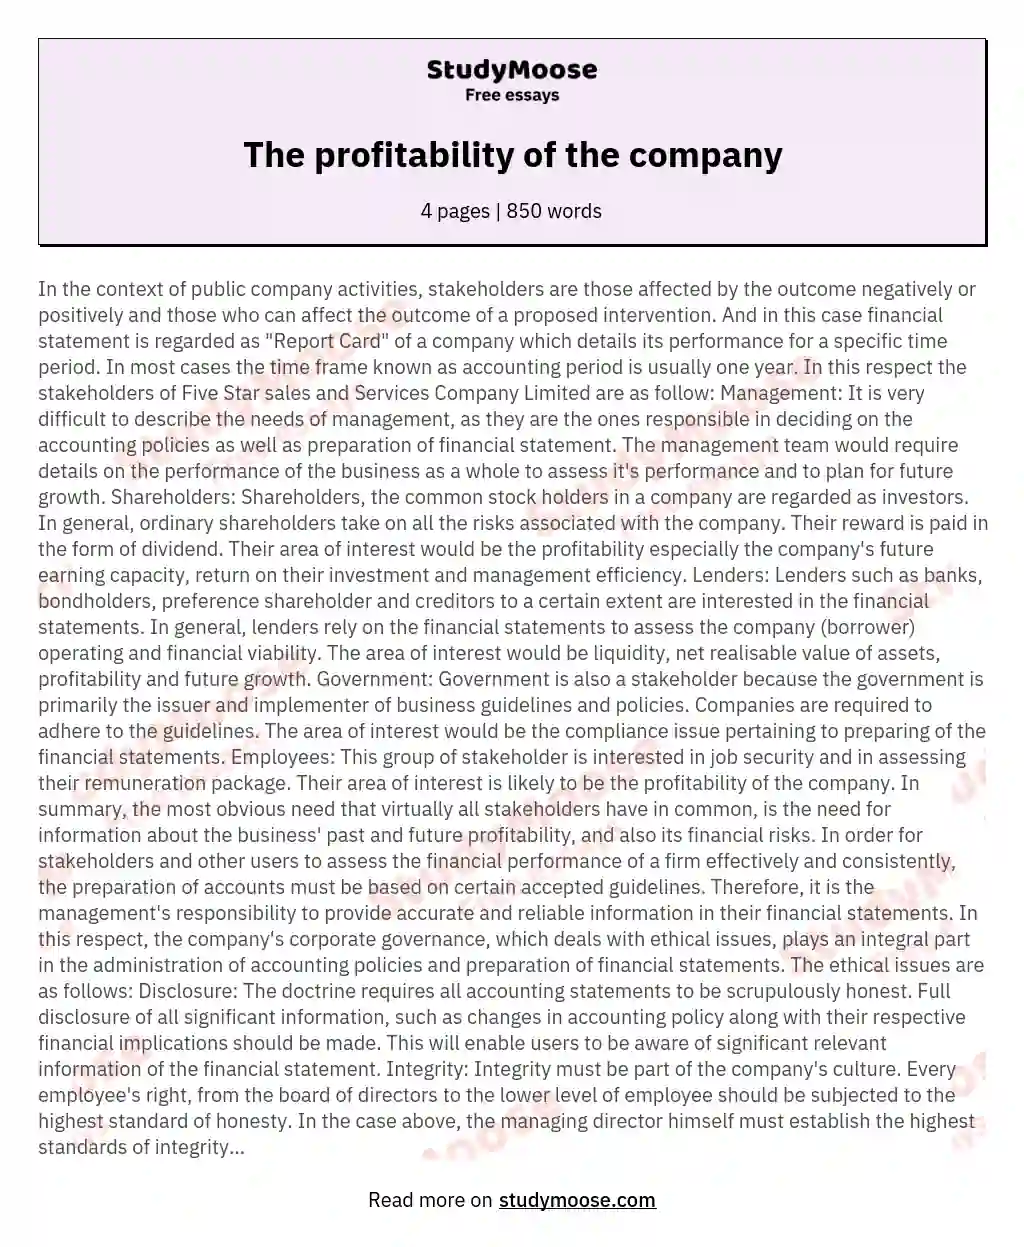 The profitability of the company essay